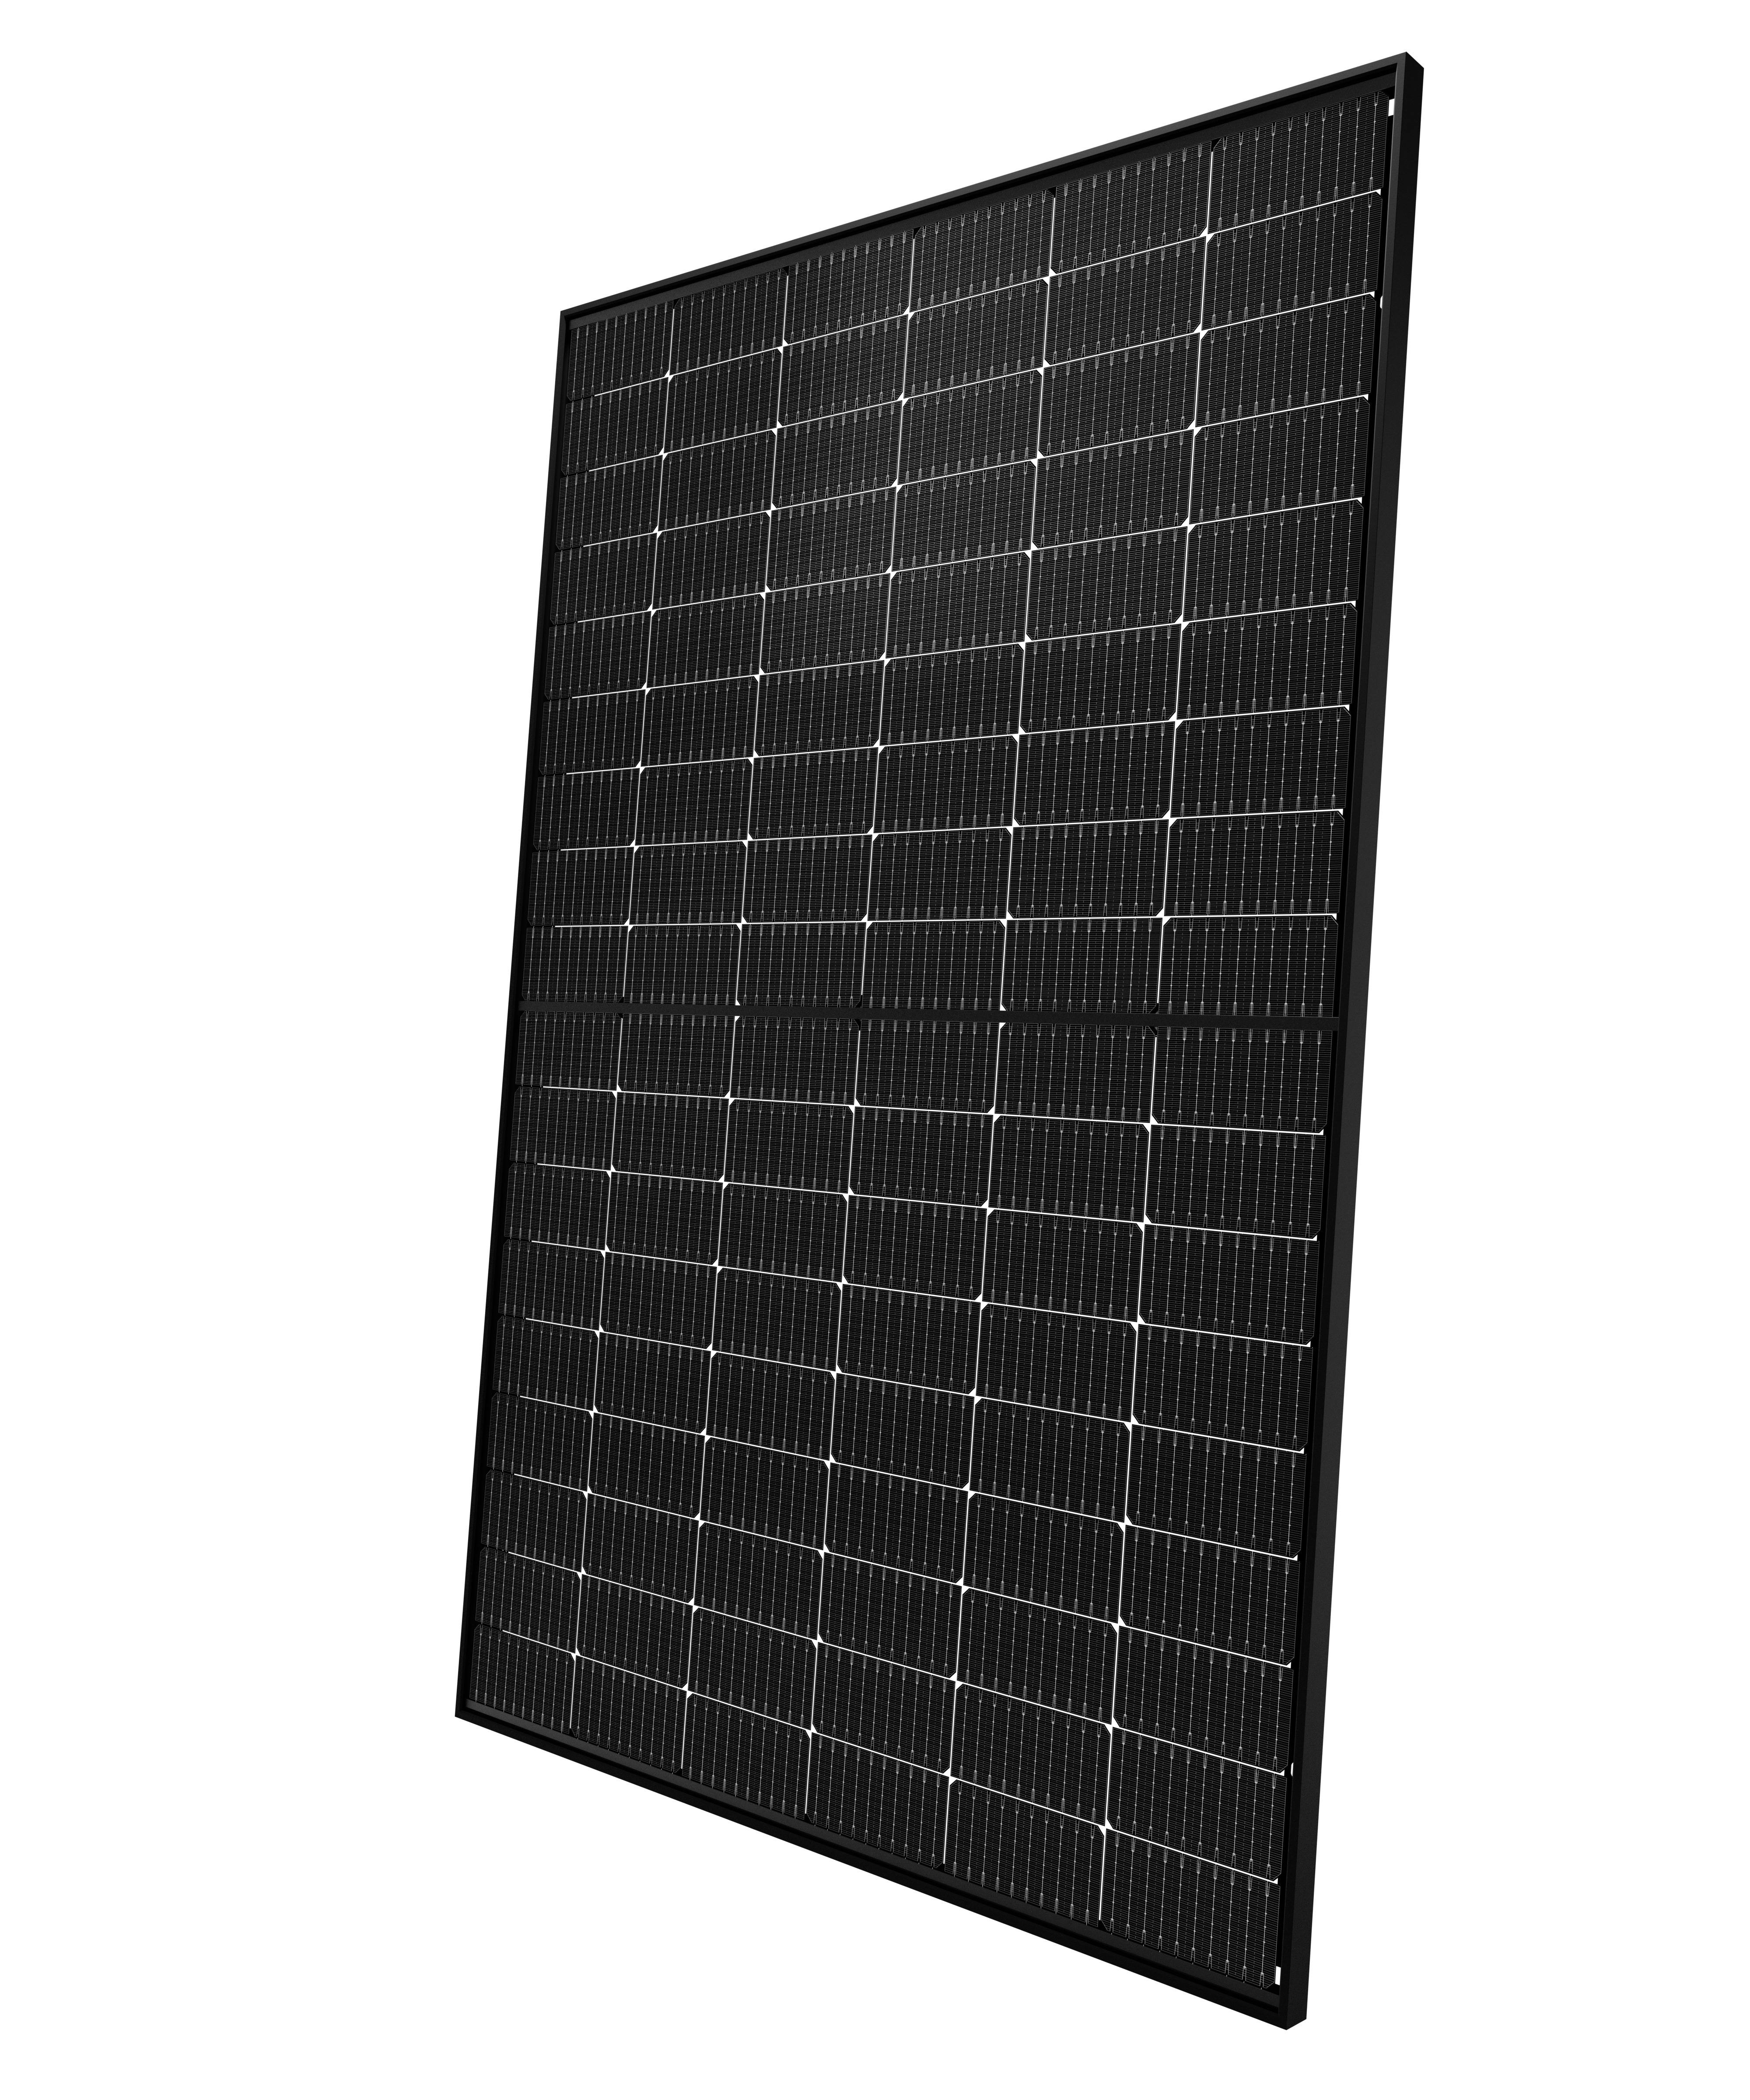 SOLARWATT Panel vision AM 4.5 420 Watt style Glas/Glas